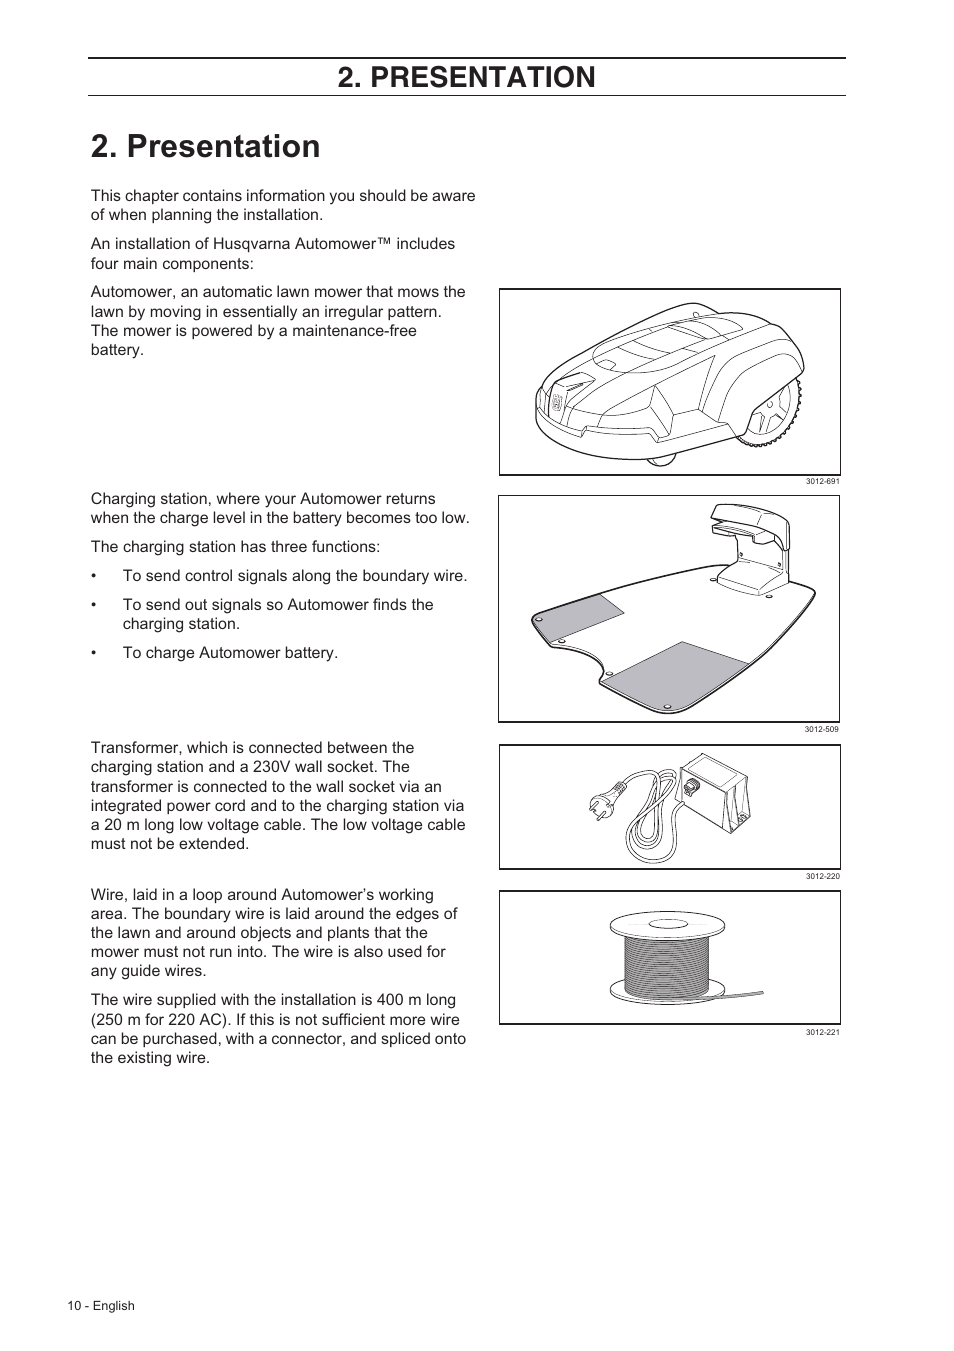 Presentation Husqvarna 220 AC User Manual | Page 9 / 82